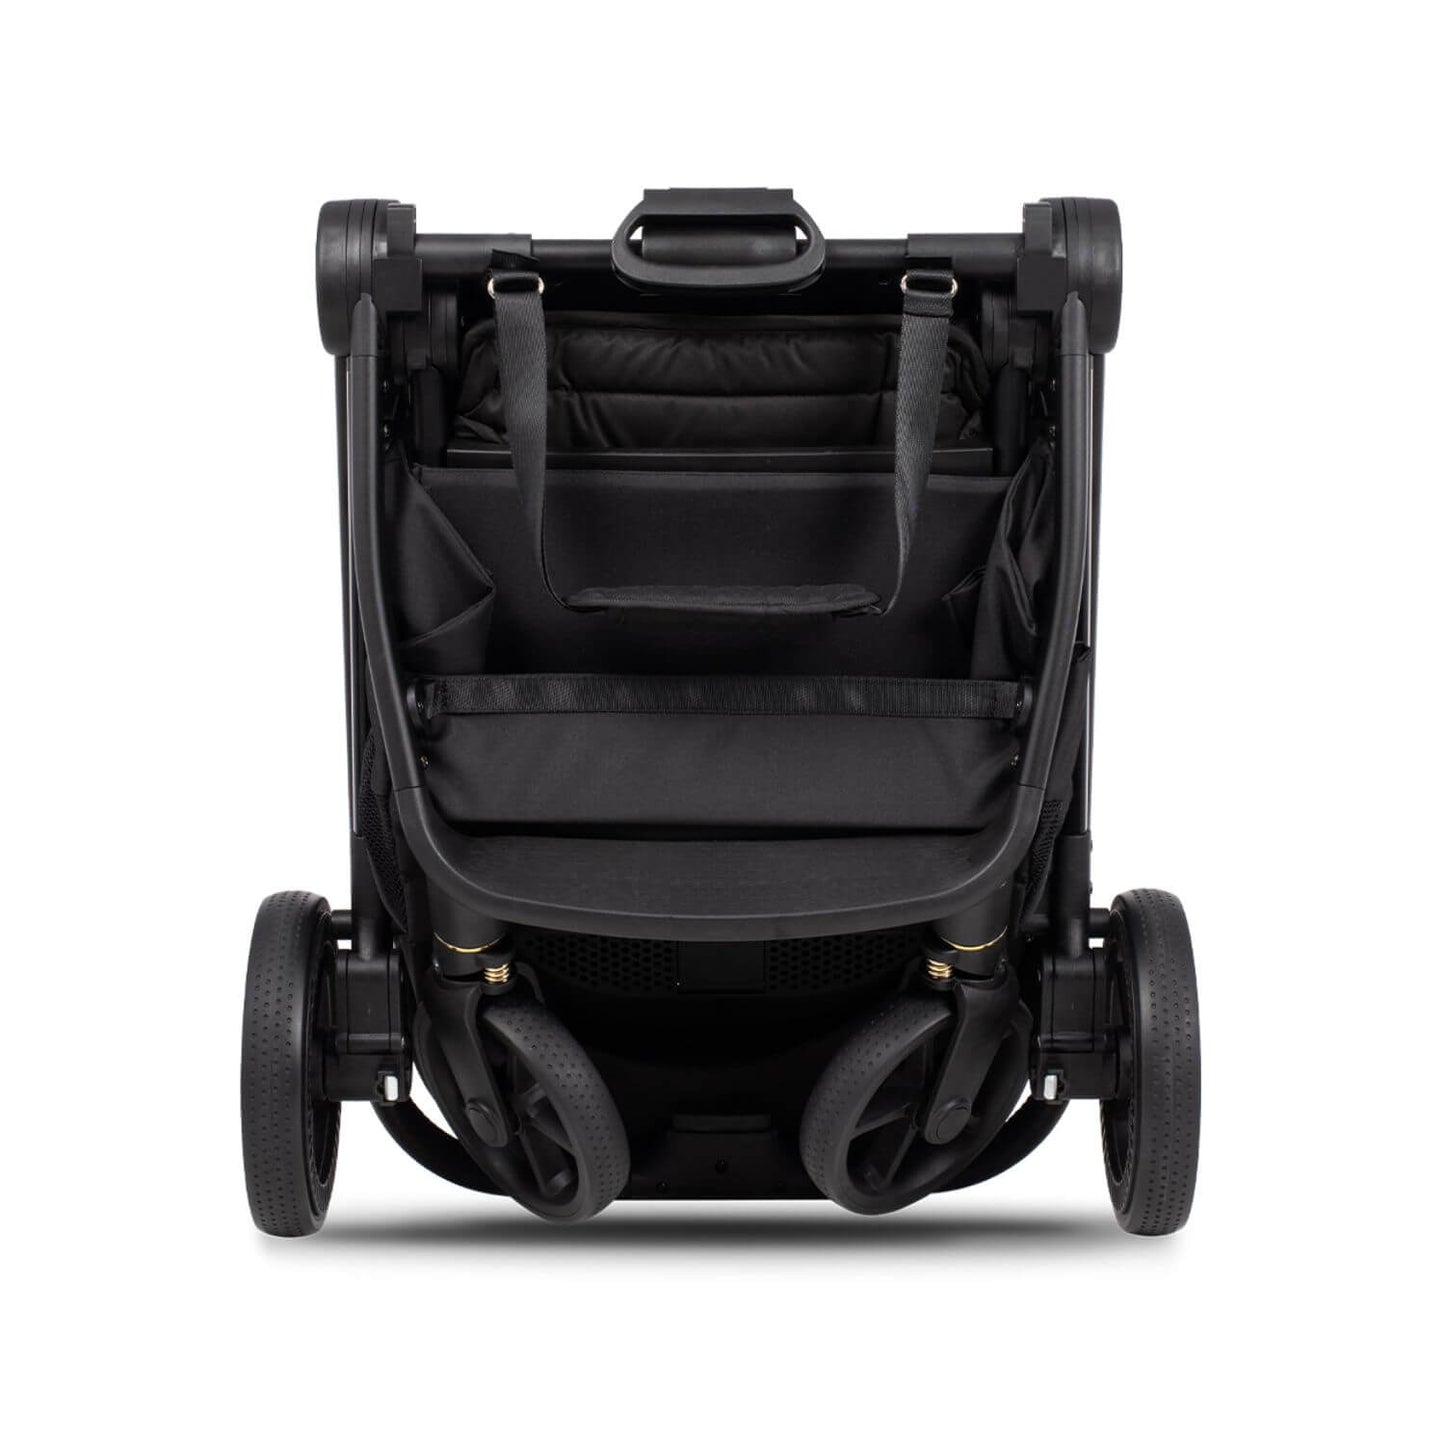 Durable All-Terrain Stroller